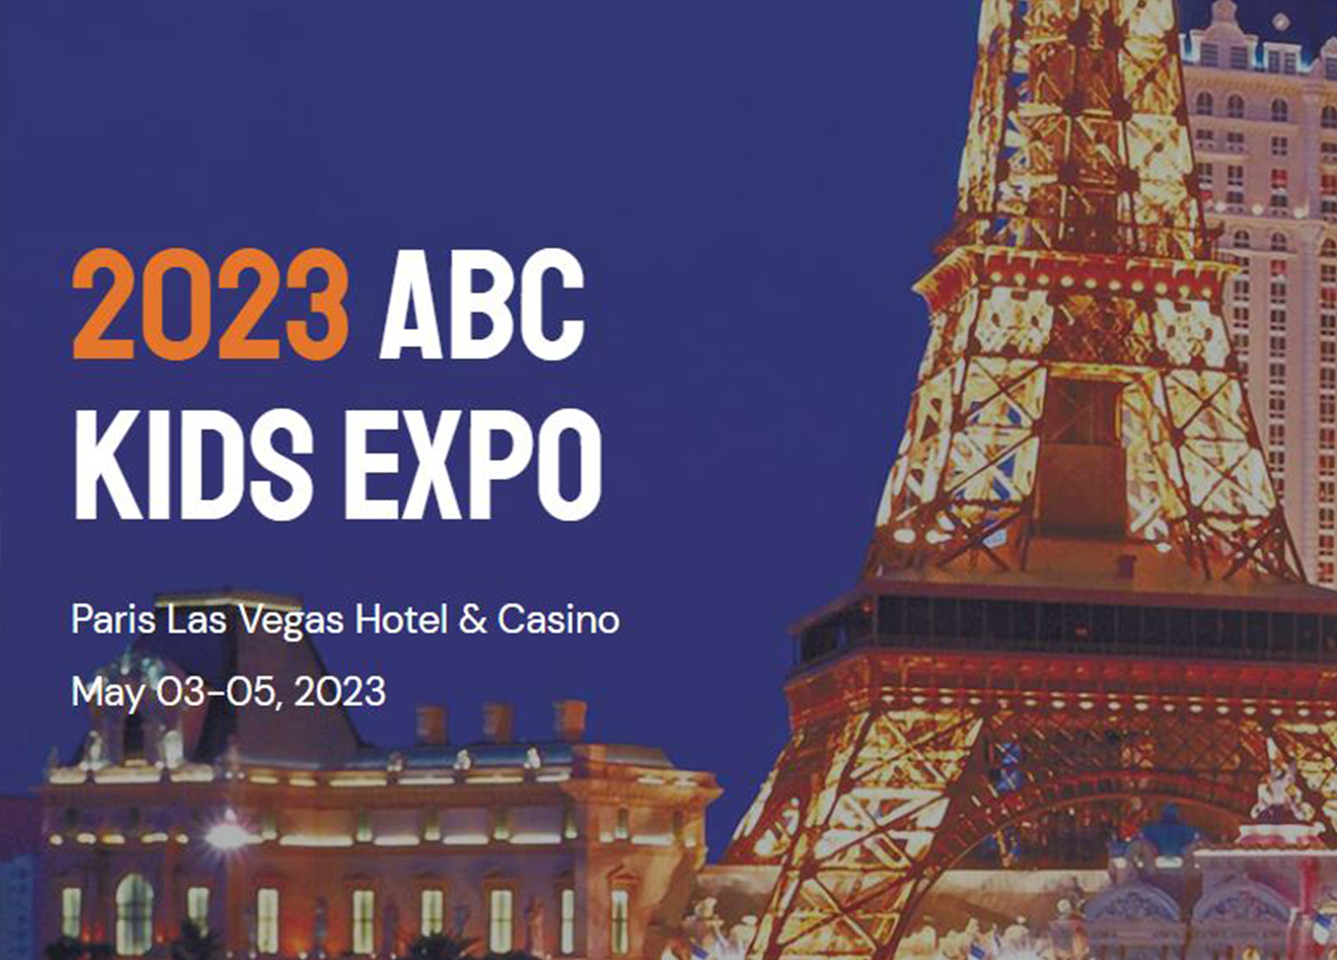 2023 ABC Kids EXPO in Las Vegas